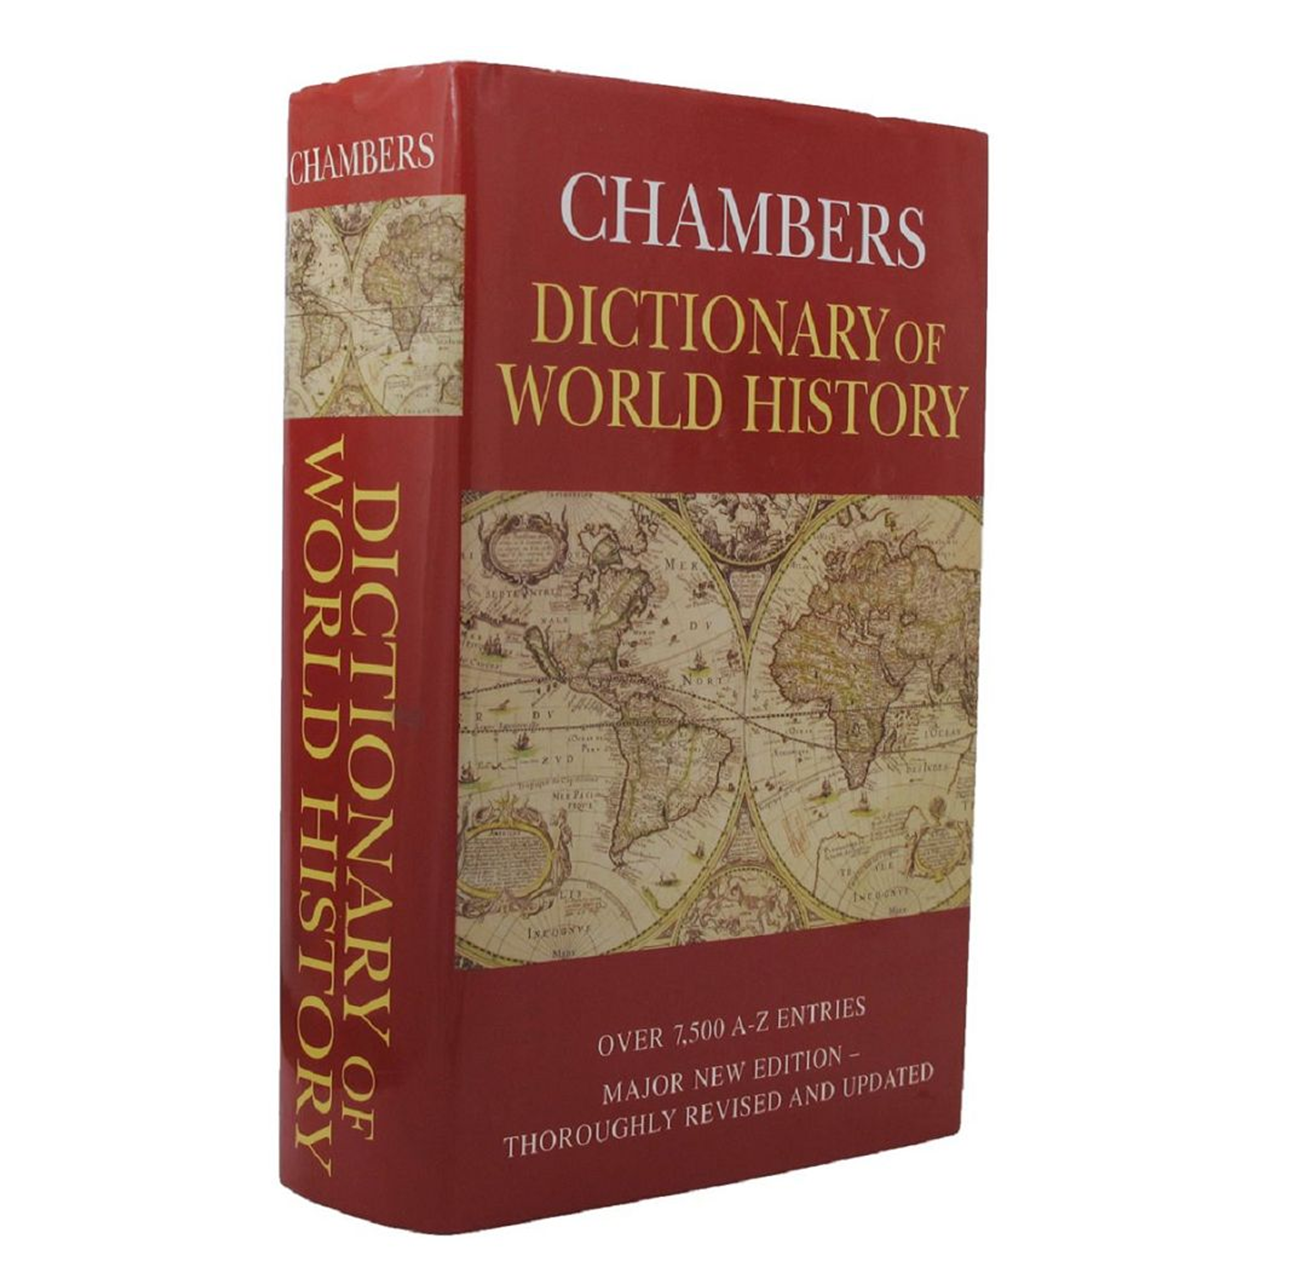 CHAMBERS DICTIONARY OF WORLD HISTORY. 